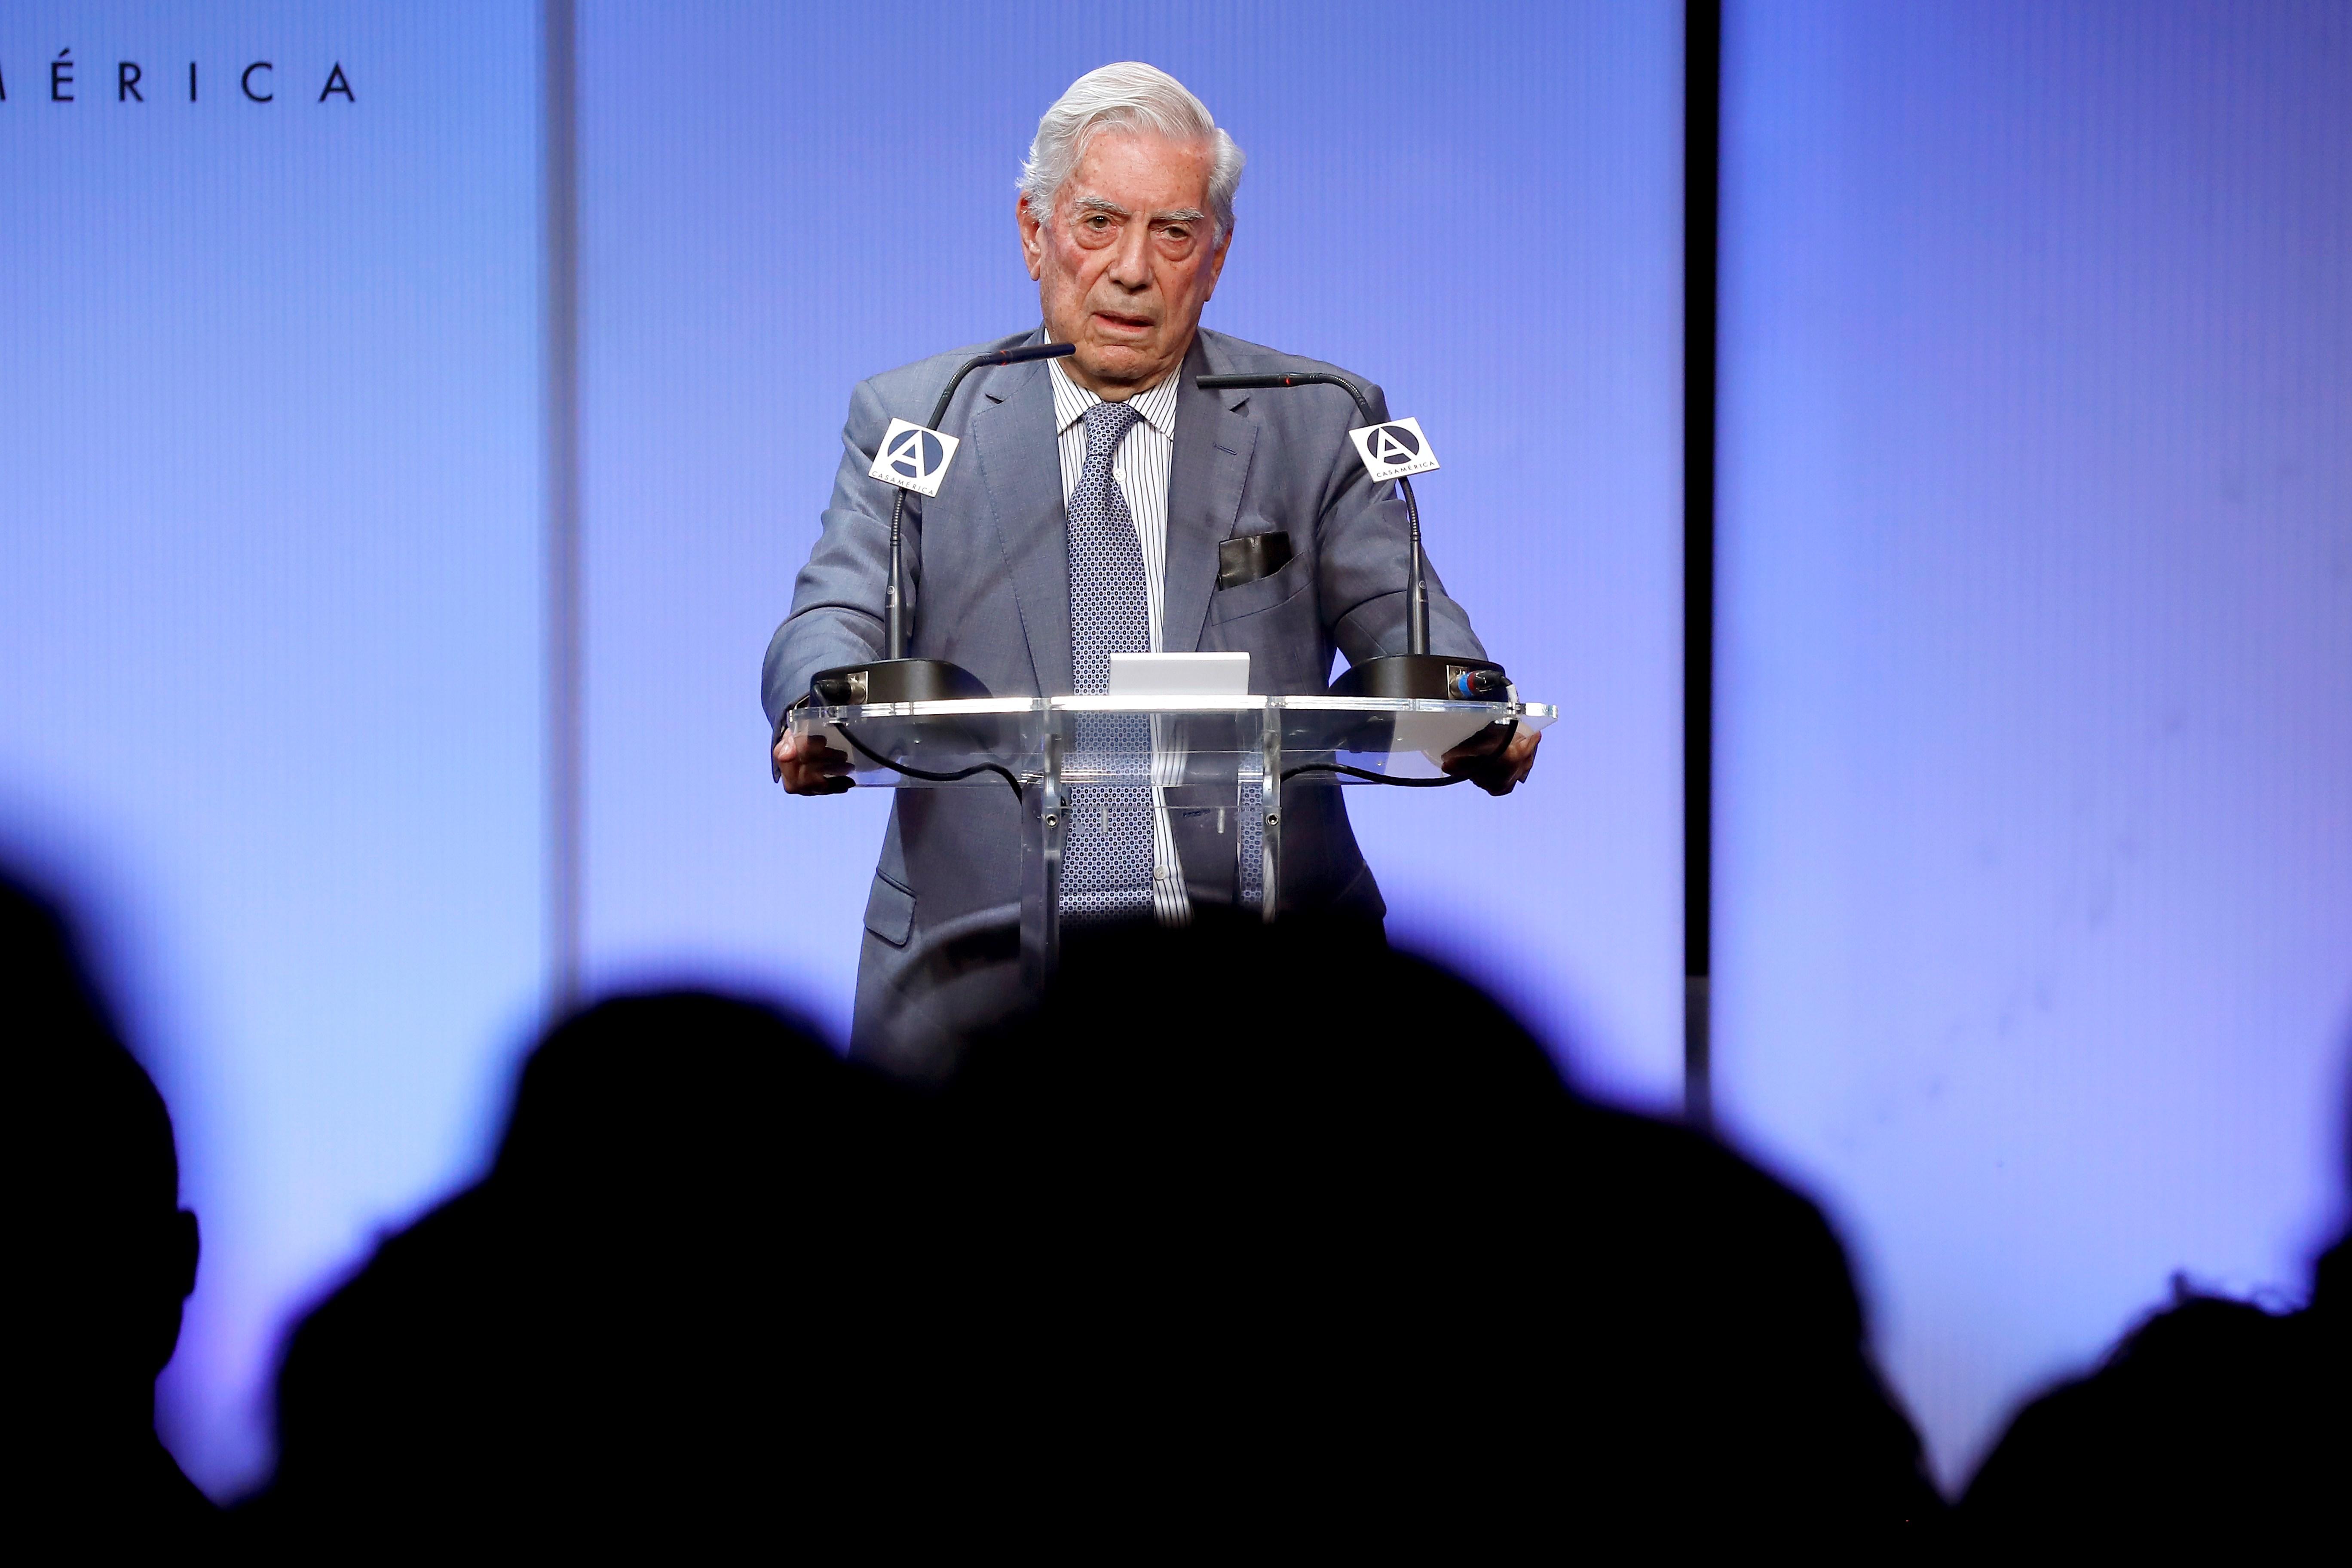 Mario Vargas Llosa praises king Felipe VI's incendiary speech on Catalonia